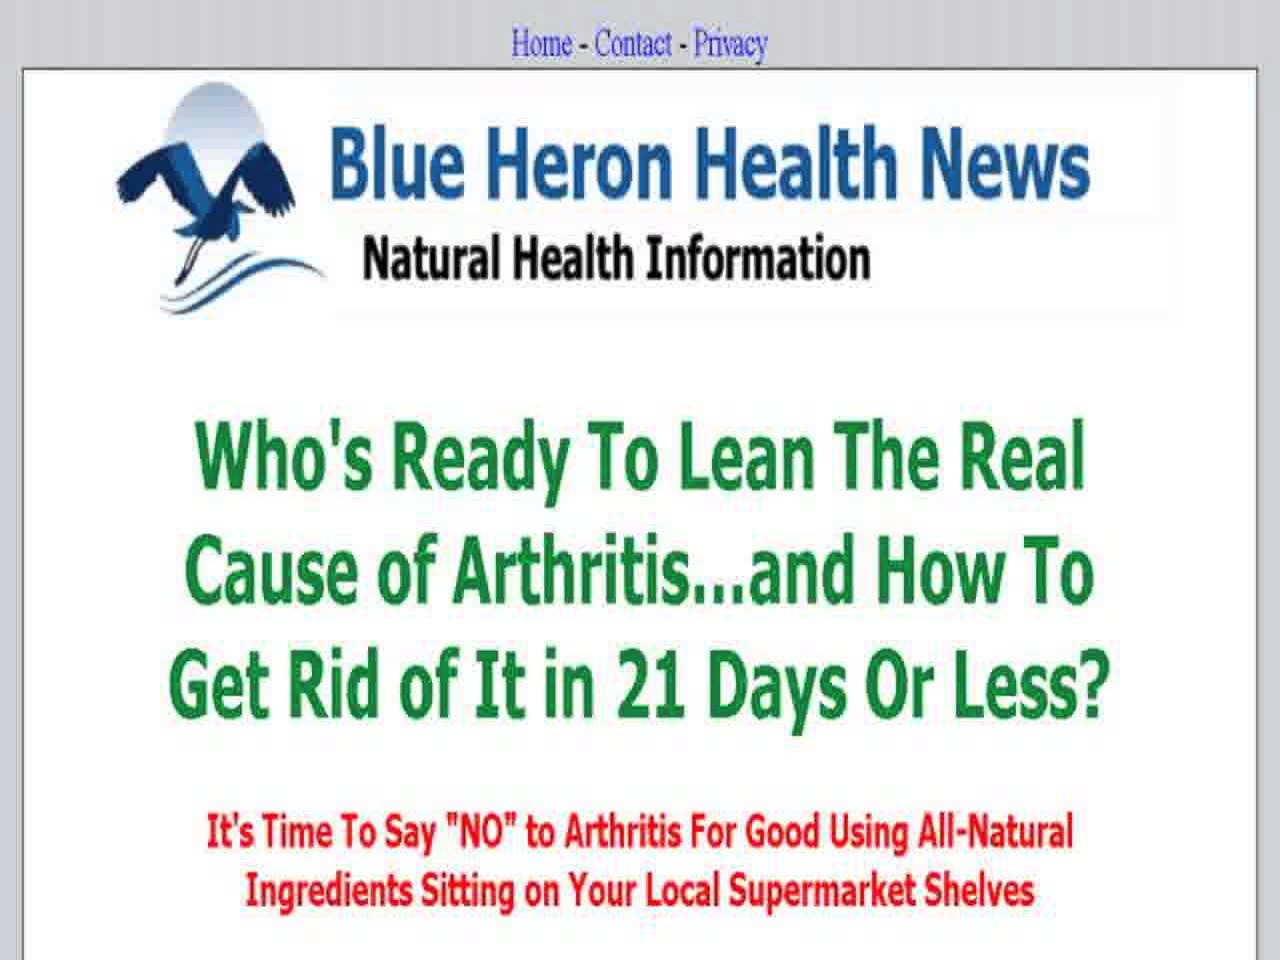 Cure Arthritis Naturally The 21 Day Step By Step Arthritis Strategy By Blue Heron Health News - eBook PDF Program